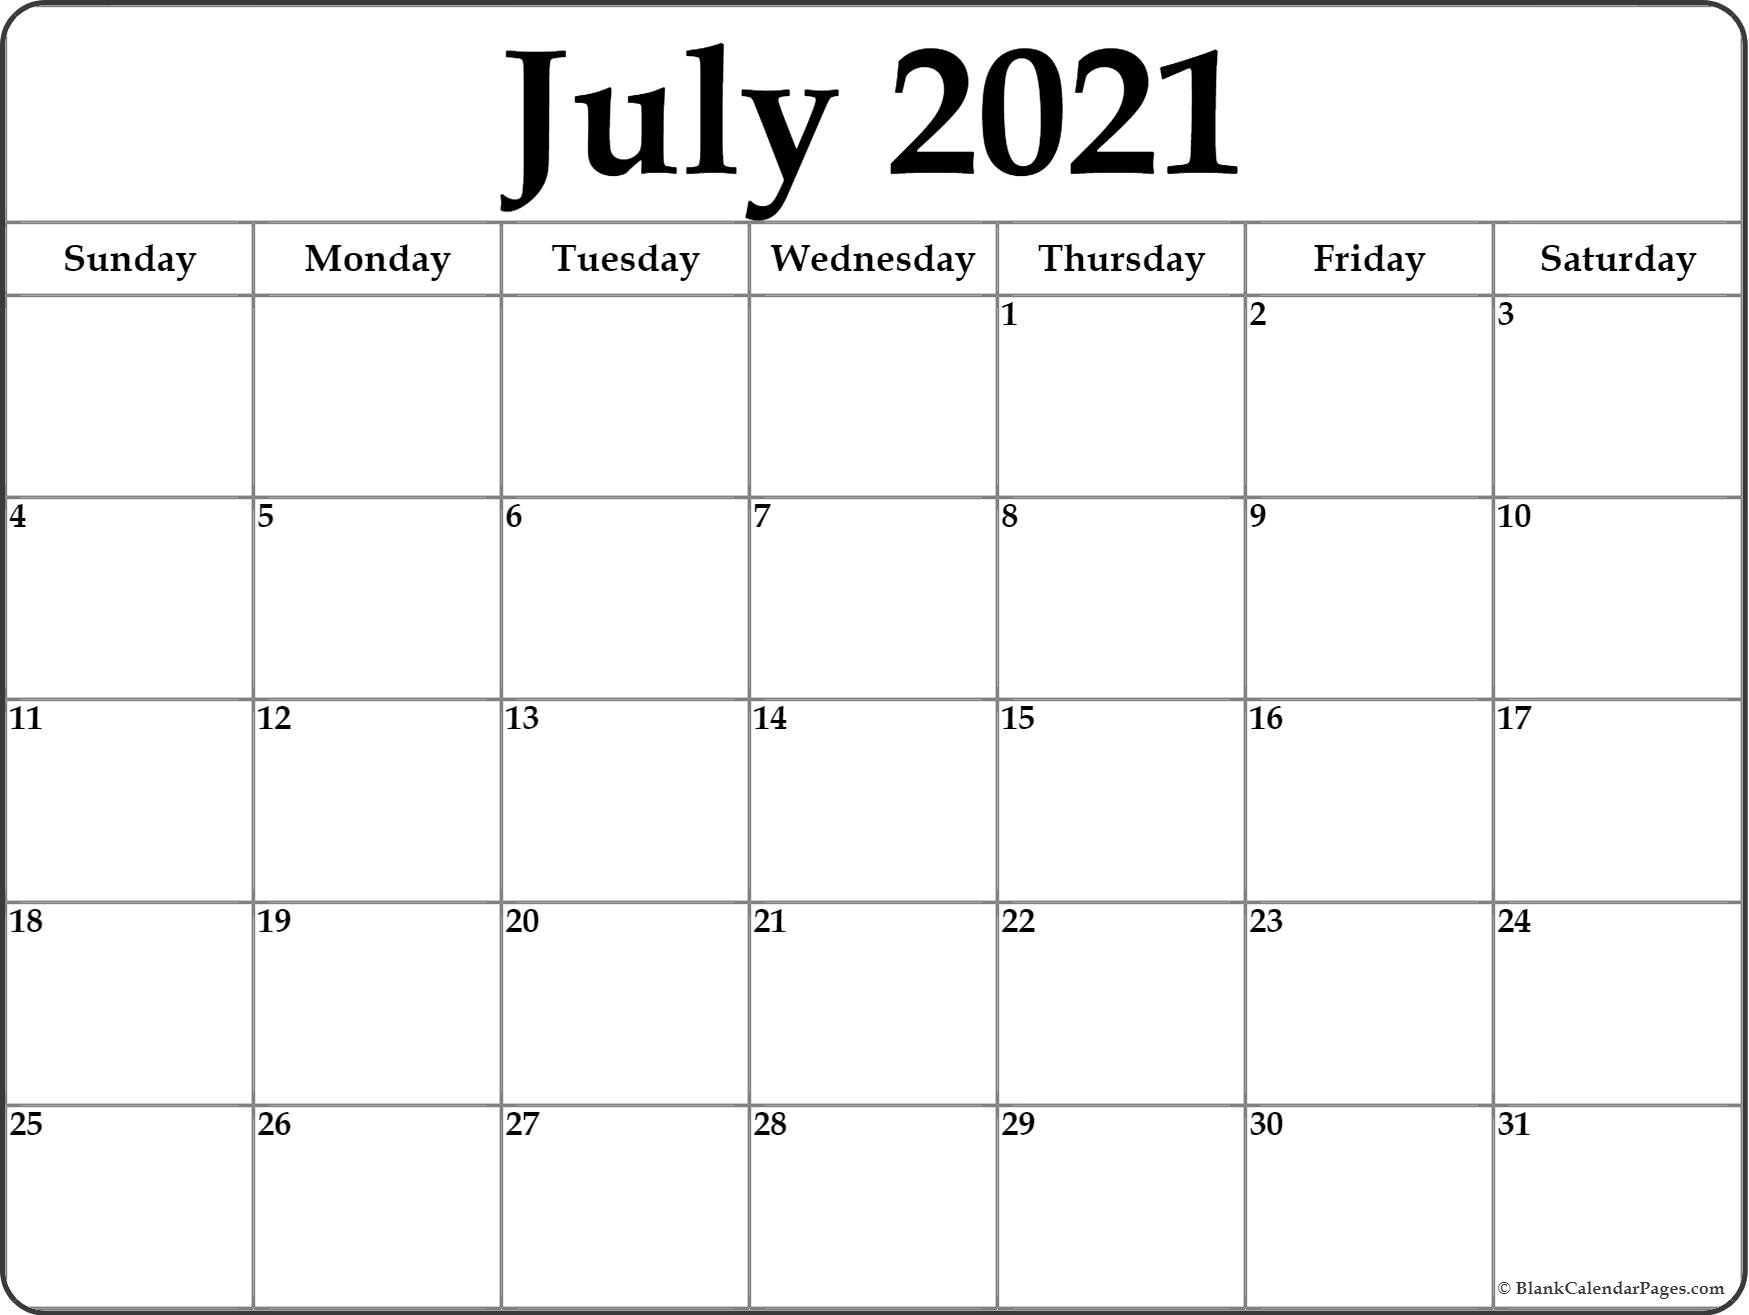 July 2021 Blank Calendar Templates.